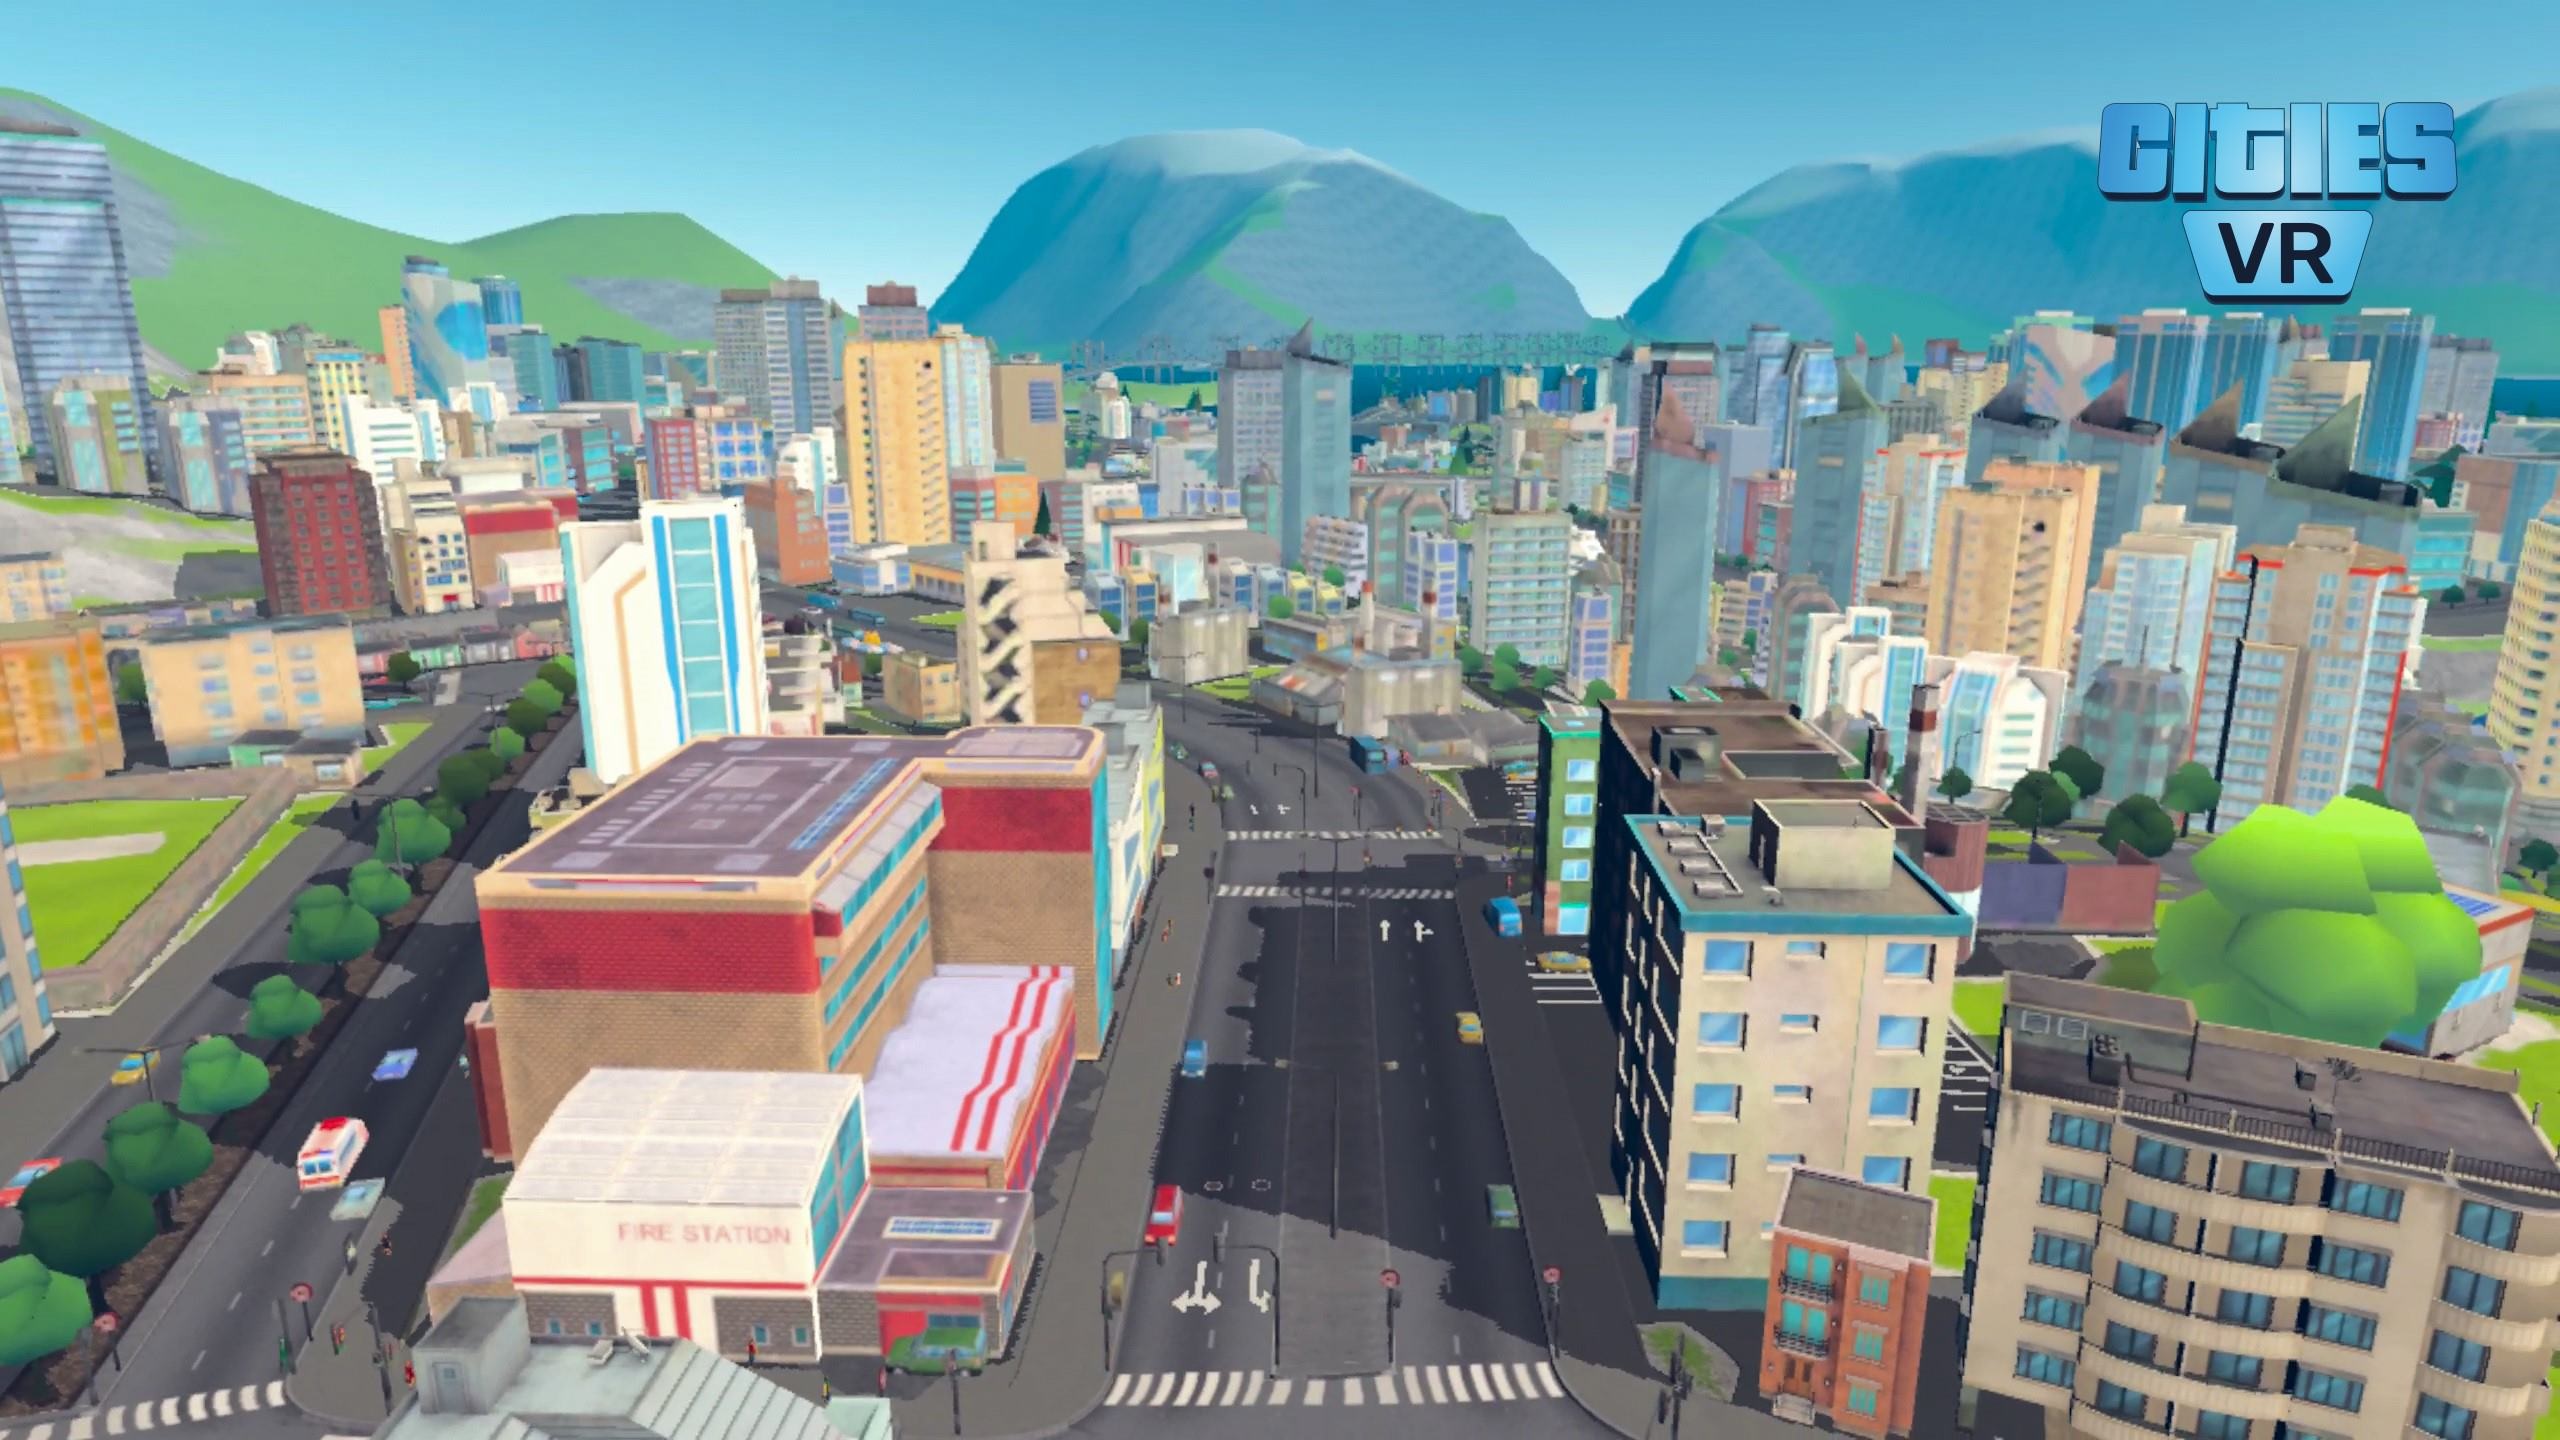 Cities VR brings building sim to Meta Quest 2